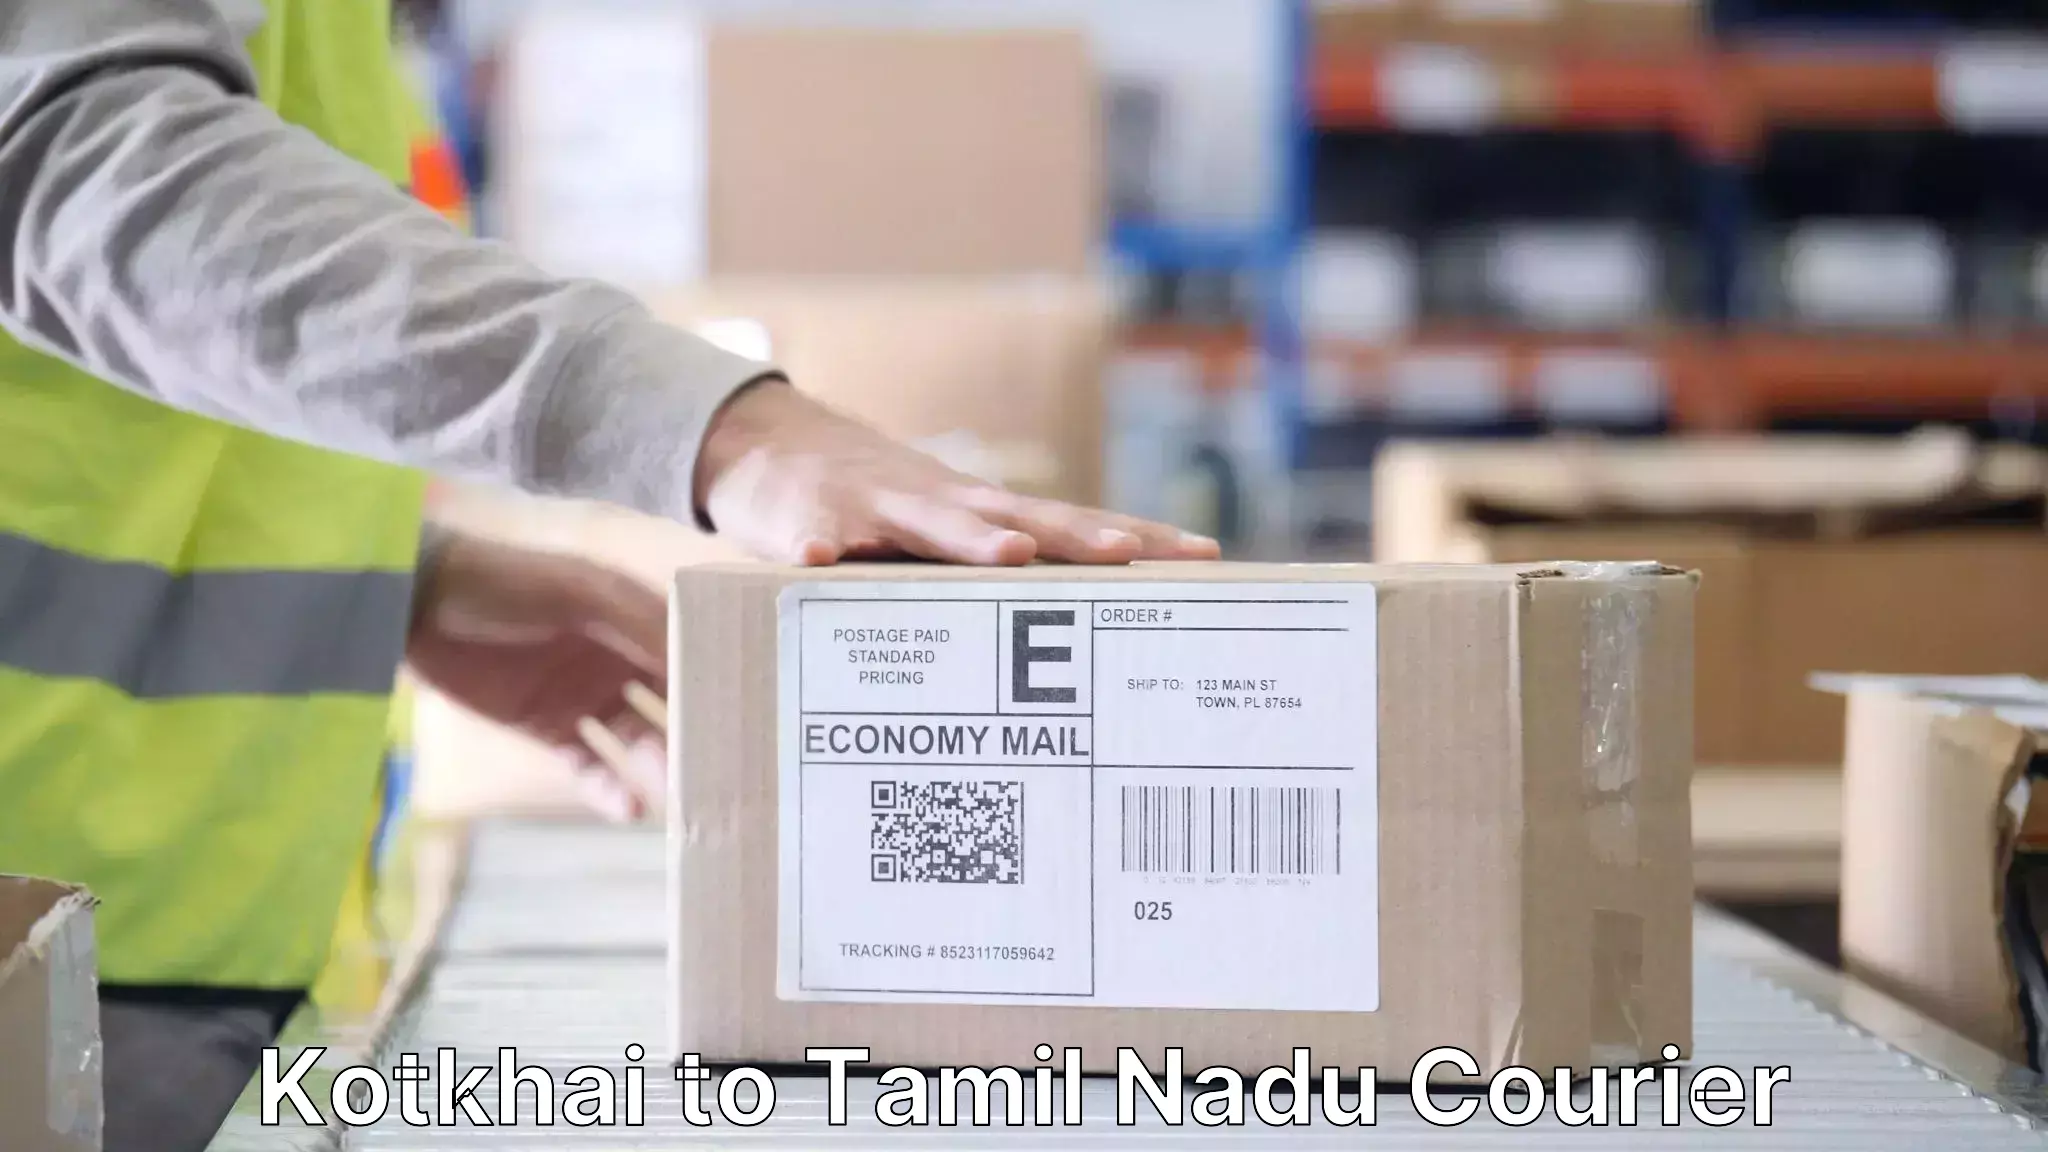 Professional home movers Kotkhai to Tamil Nadu